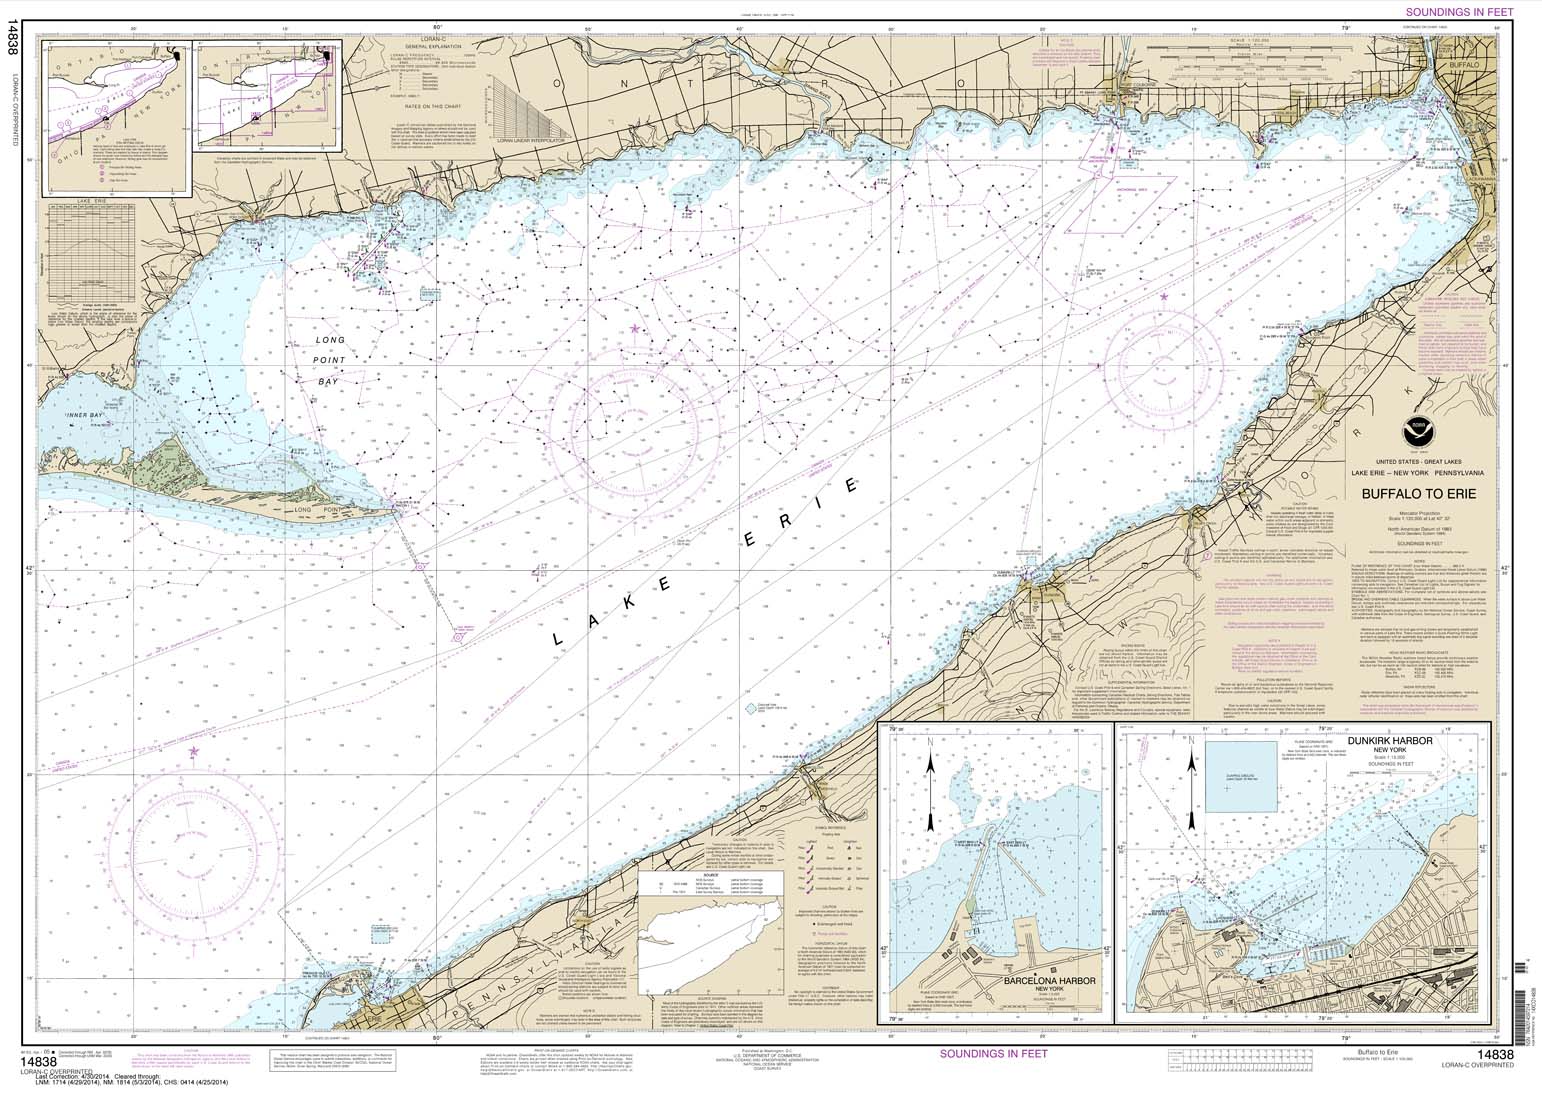 HISTORICAL NOAA Chart 14838: Buffalo to Erie;Dunkirk;Barcelone Harbor